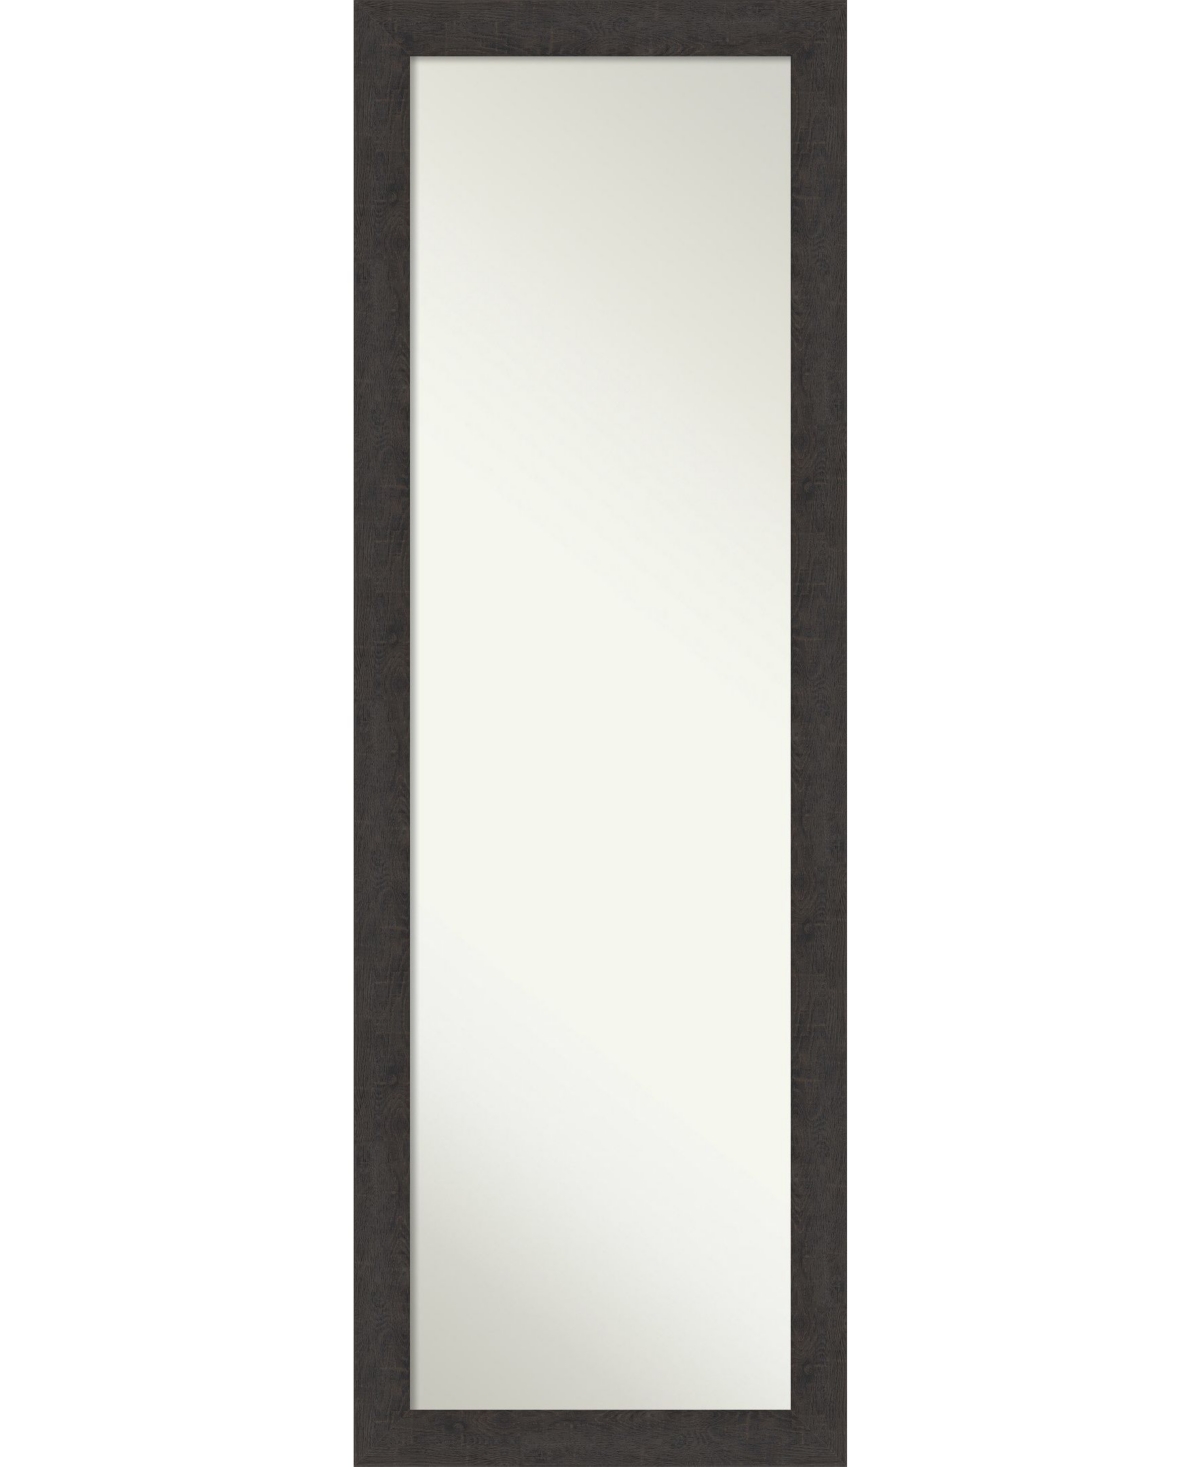 Rustic Plank on The Door Full Length Mirror, 17.25" x 51.25" - Dark Brown